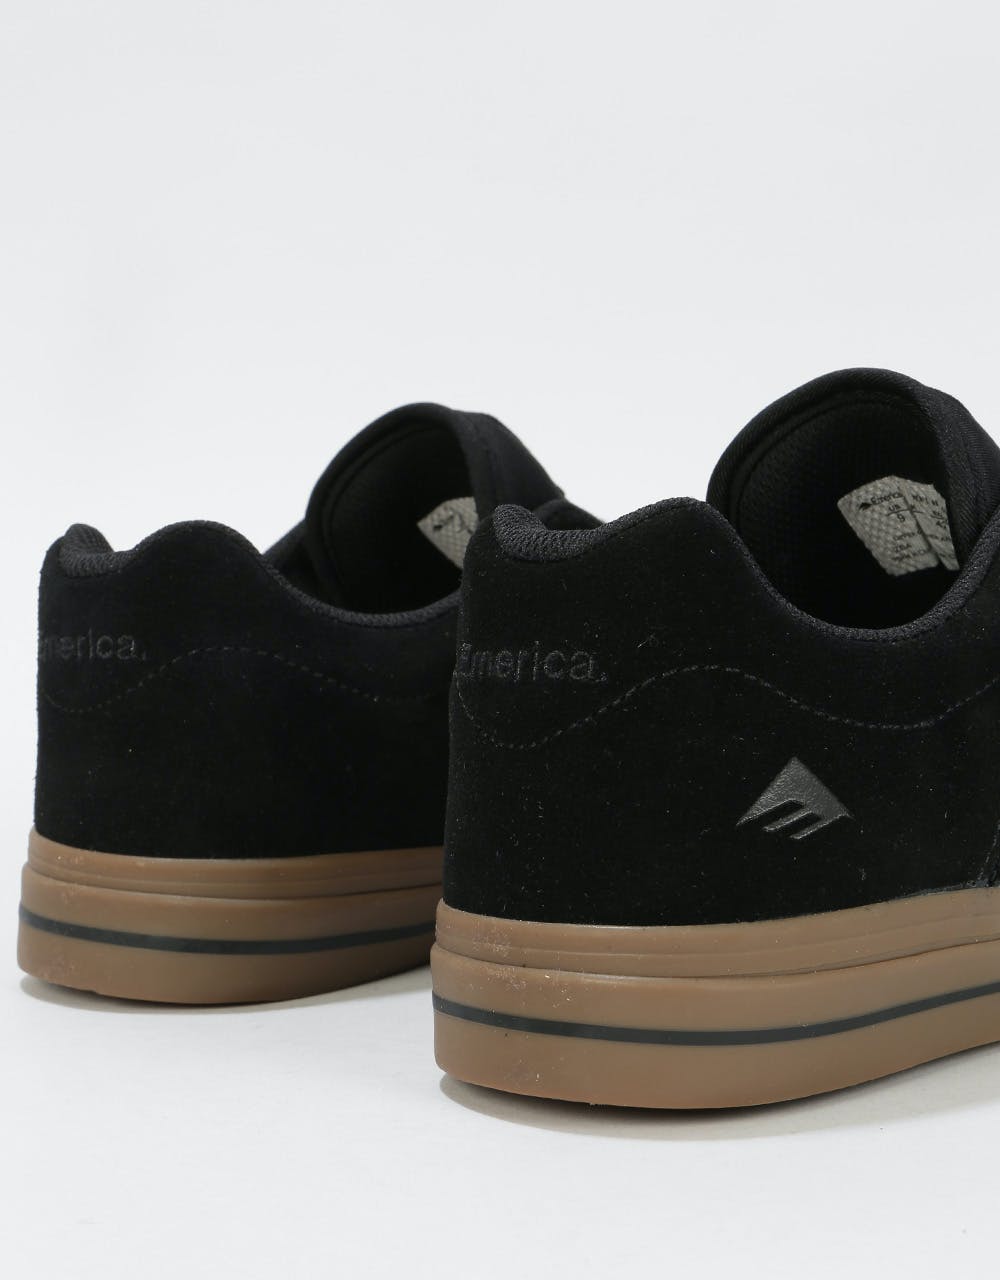 Emerica Reynolds 3 G6 Vulc Skate Shoes - Black/Gum